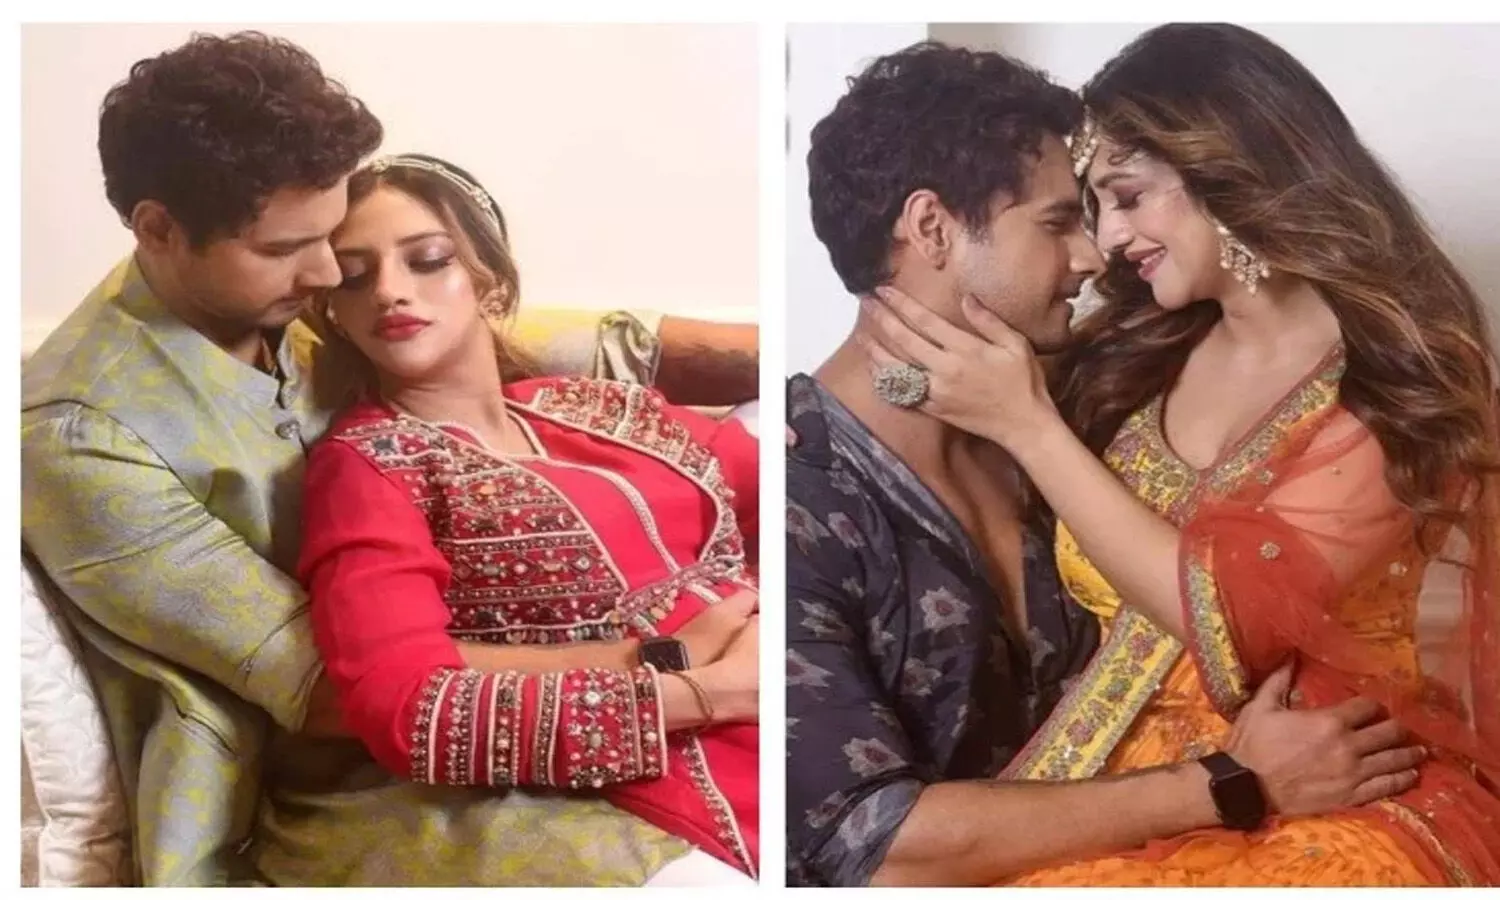 Viral! Nusrat Jahan collabs with hubby Yash Dasgupta for romantic photoshoot